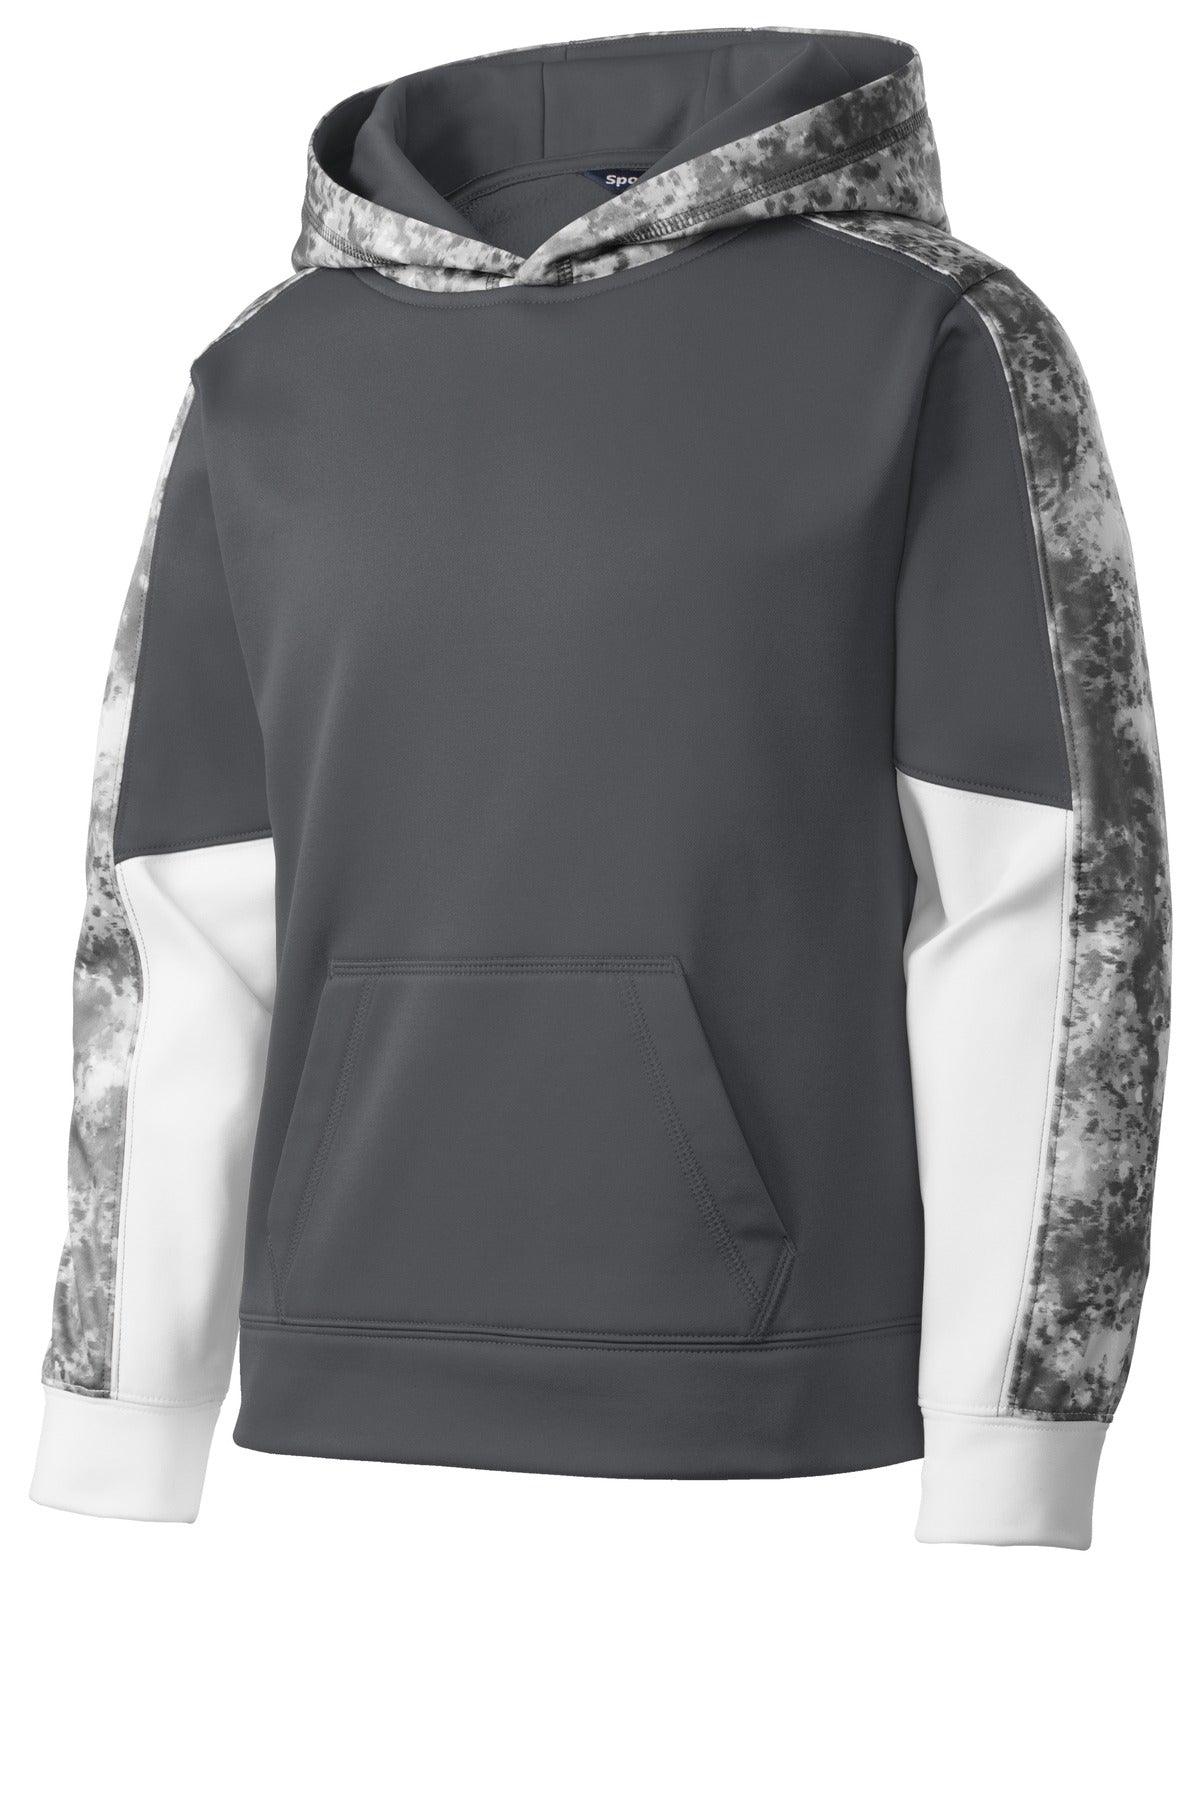 Sport-Tek Youth Sport-Wick Mineral Freeze Fleece Colorblock Hooded Pullover. YST231 - Dresses Max